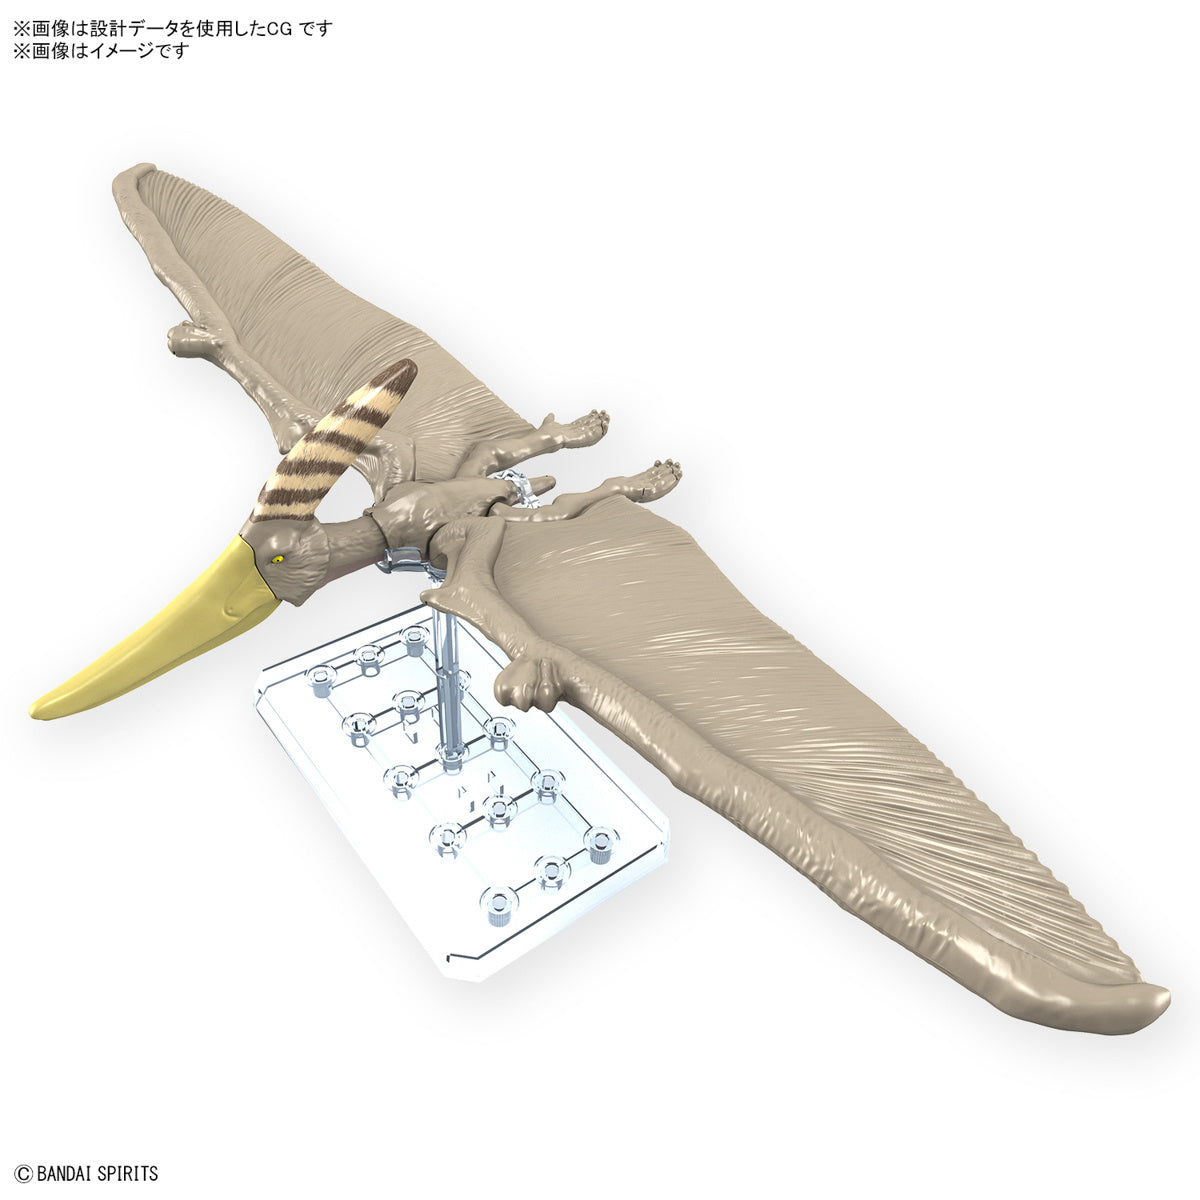 Bandai Dinosaur Model Kit Plannosaurus: Pteranodon